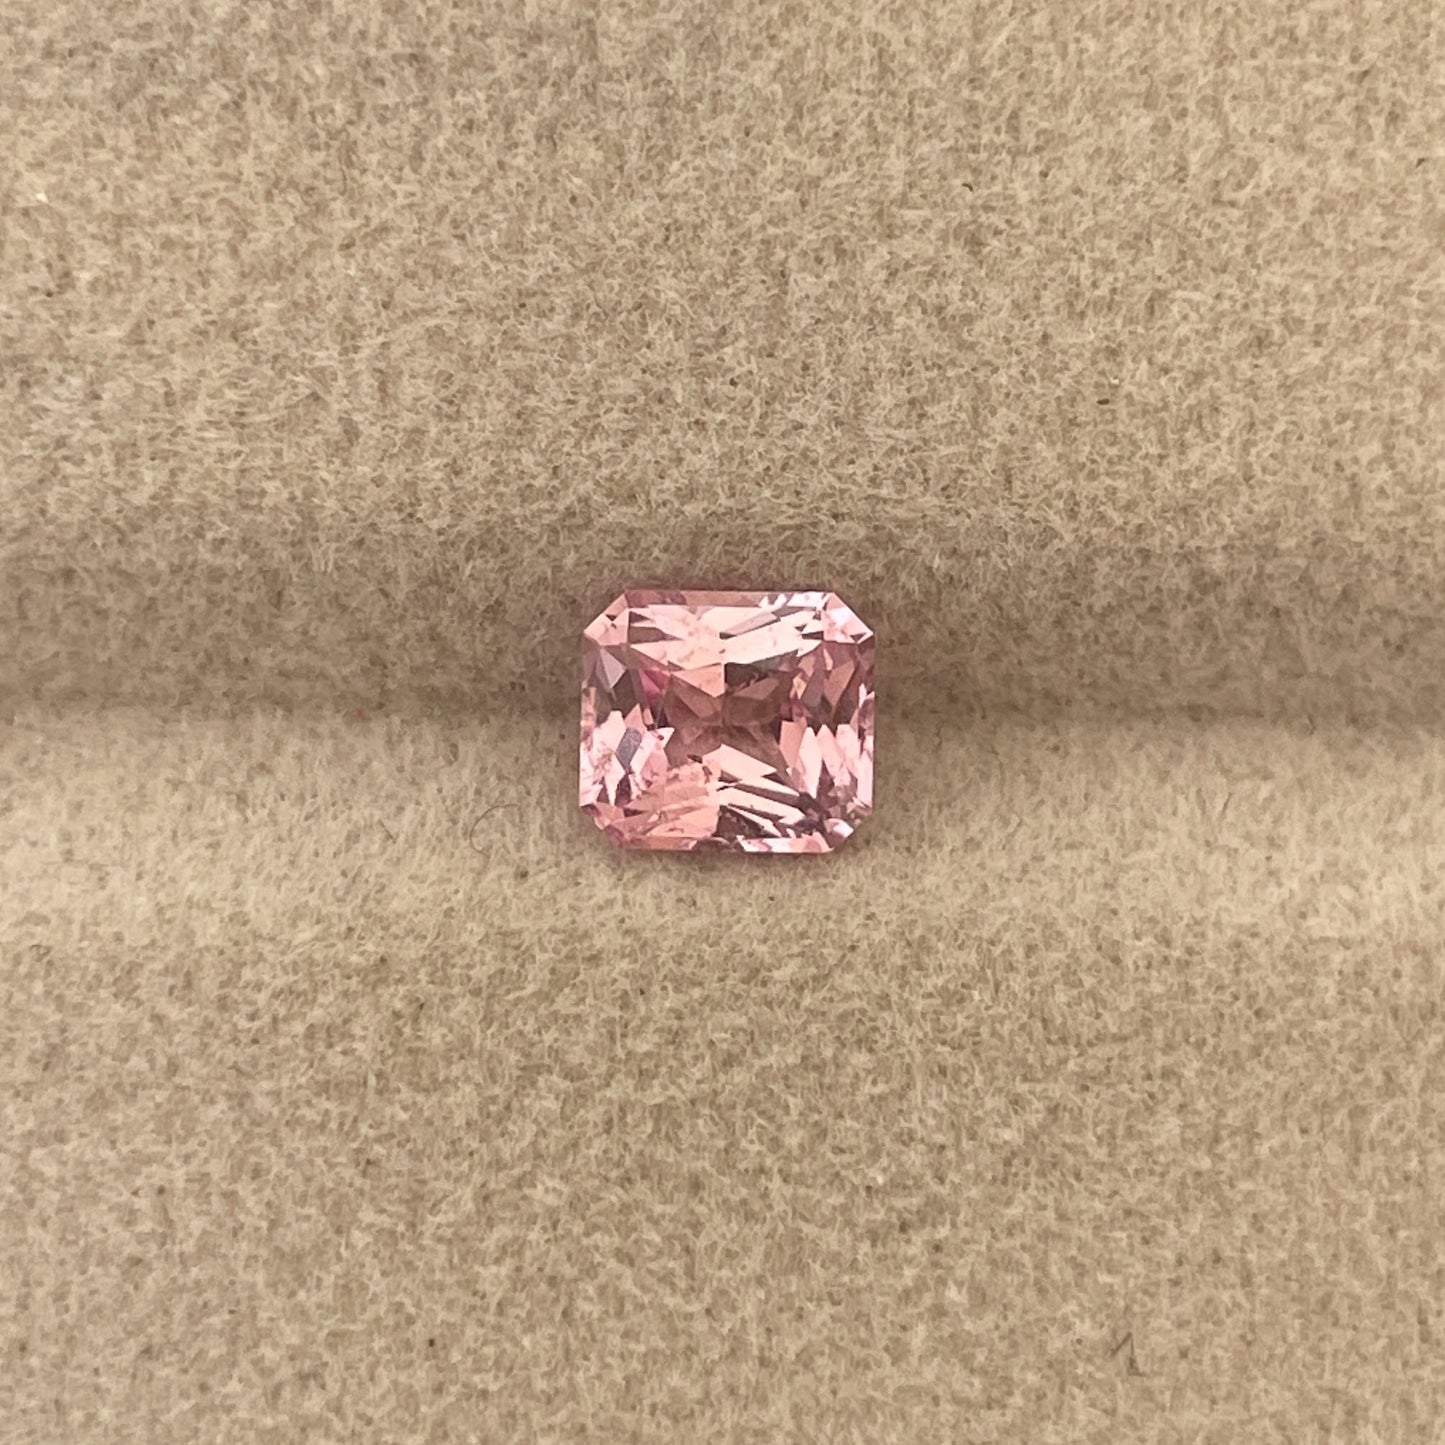 1.15 Carat Pink Sapphire